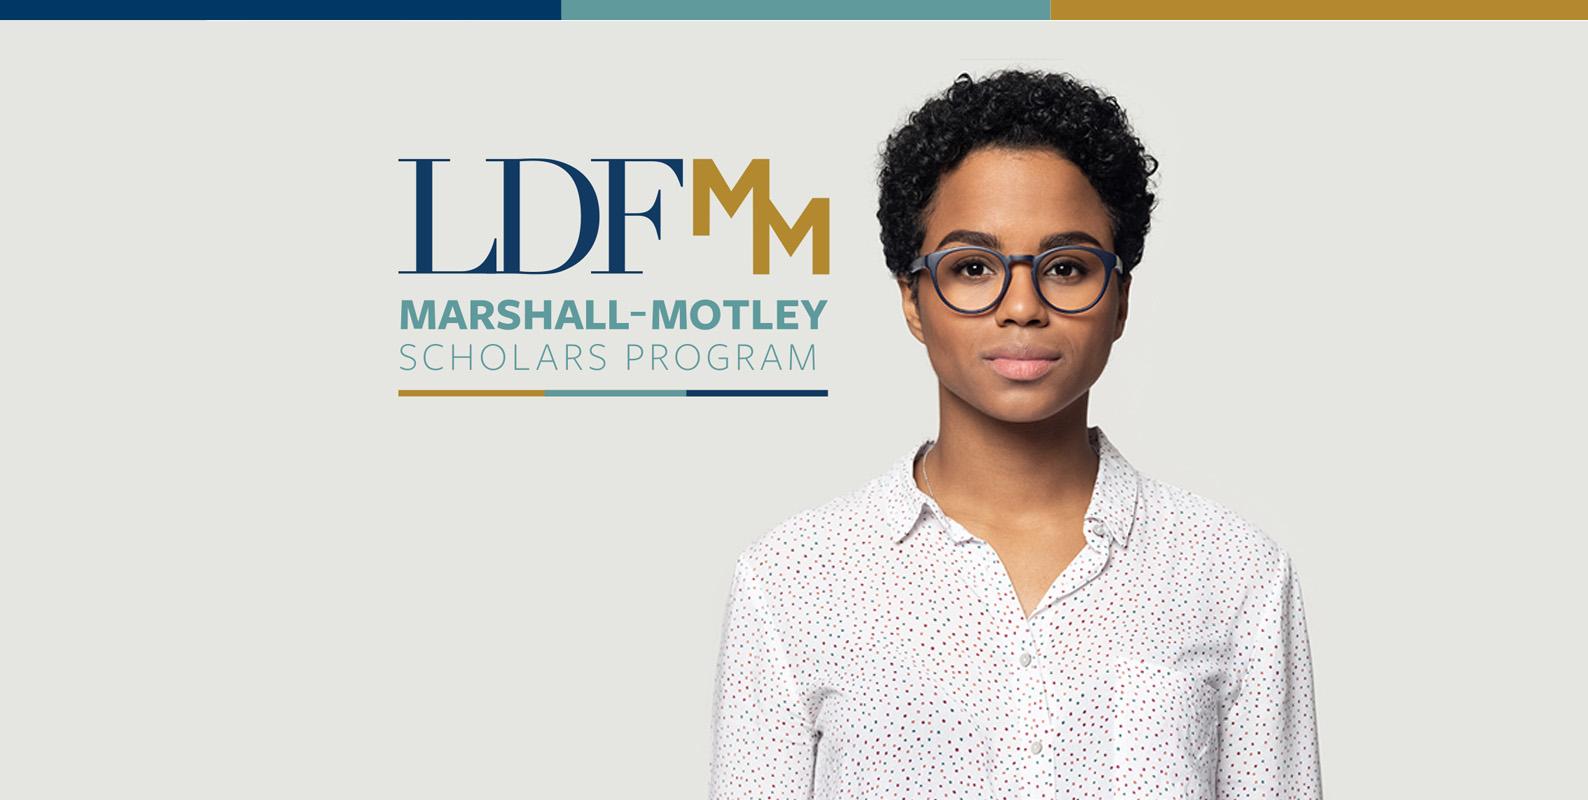 Marshall-Motley Scholars Program